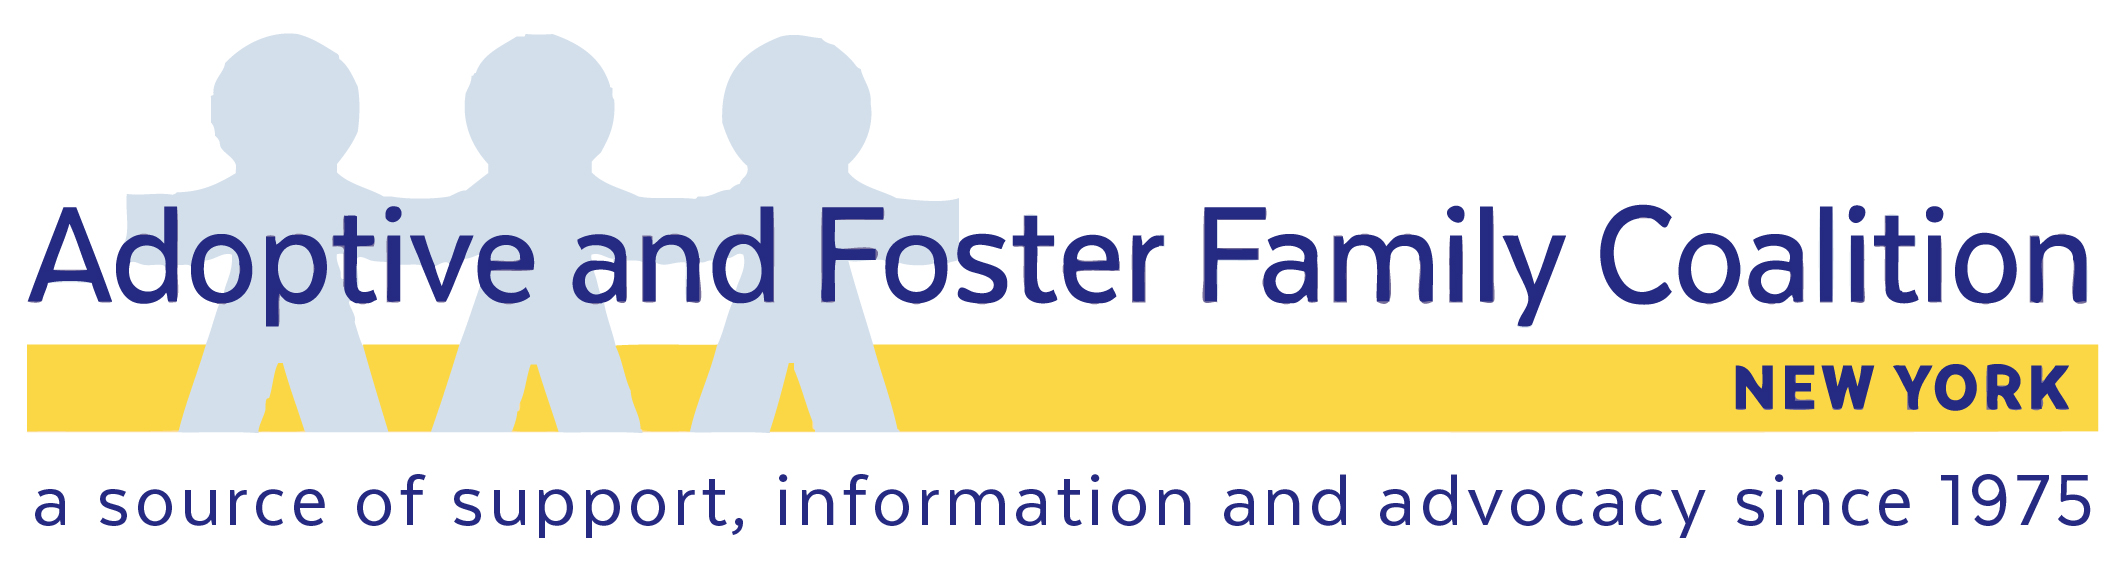 Adoption Foster Family New York